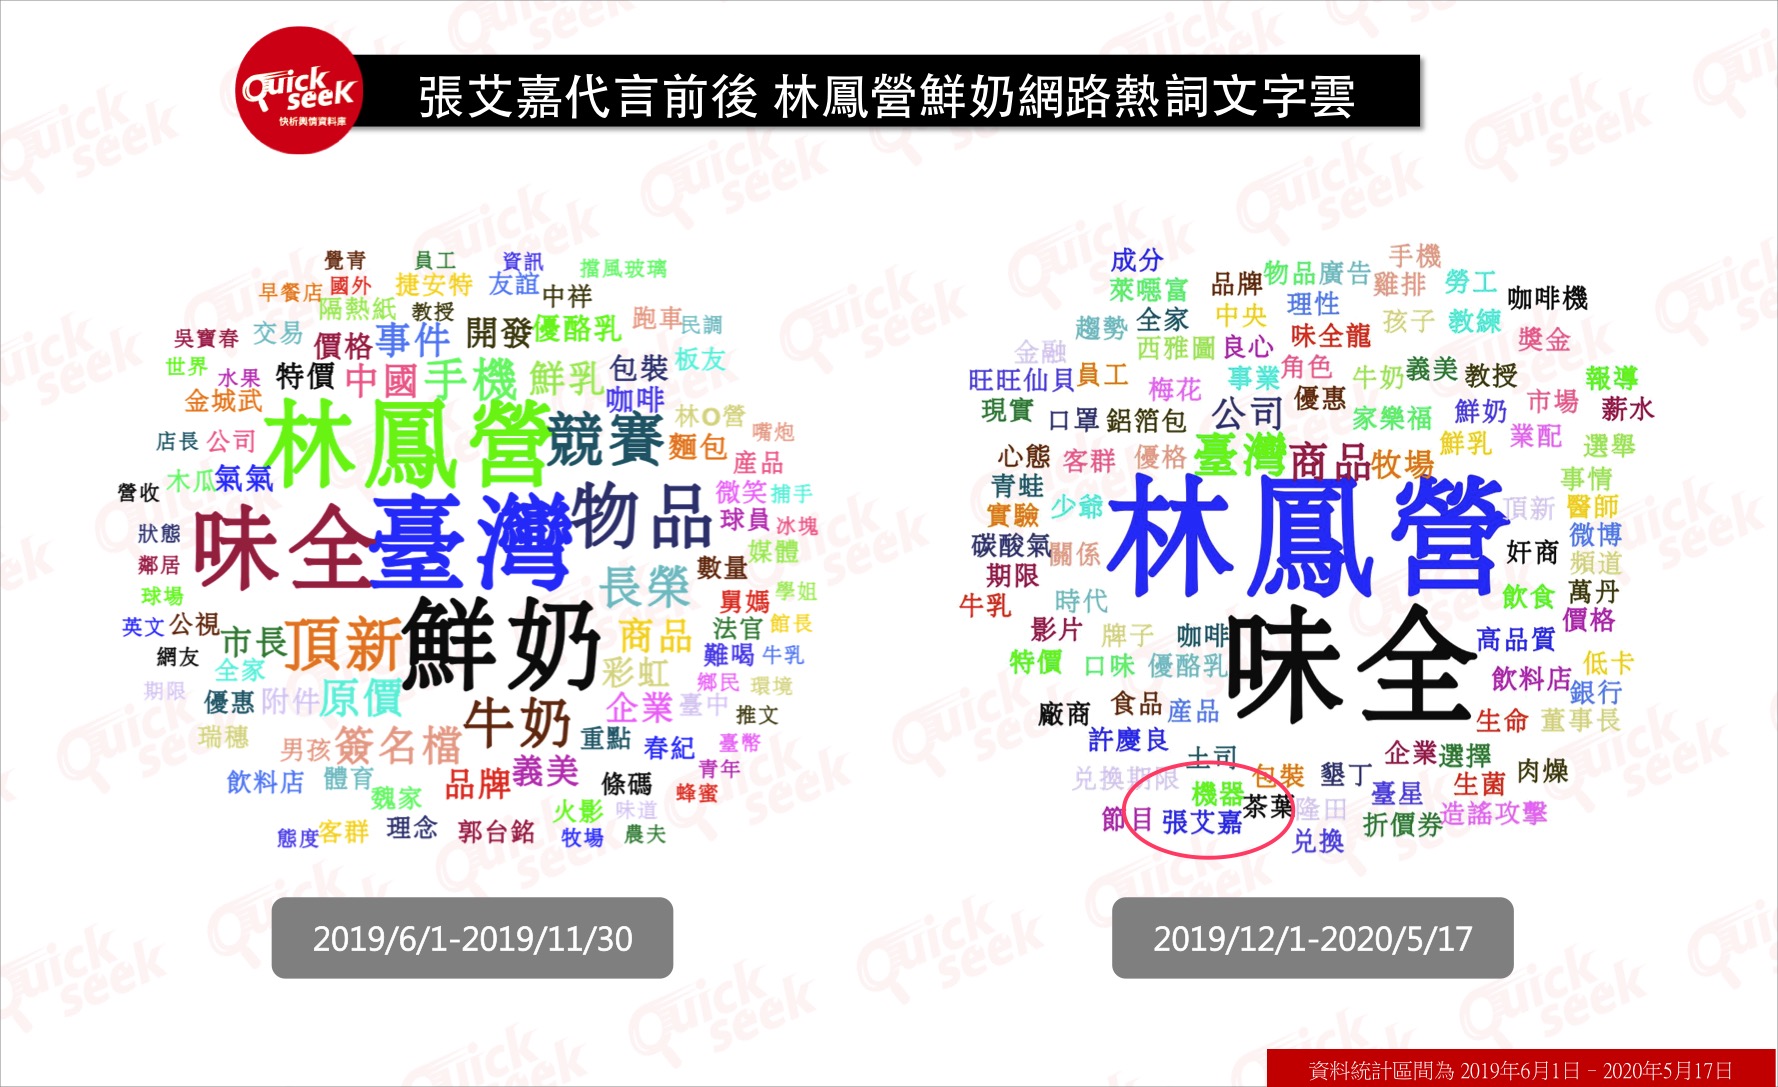 Macintosh HD:Users:koushouon:Desktop:20200517_林鳳營_04網路熱詞文字雲.jpg